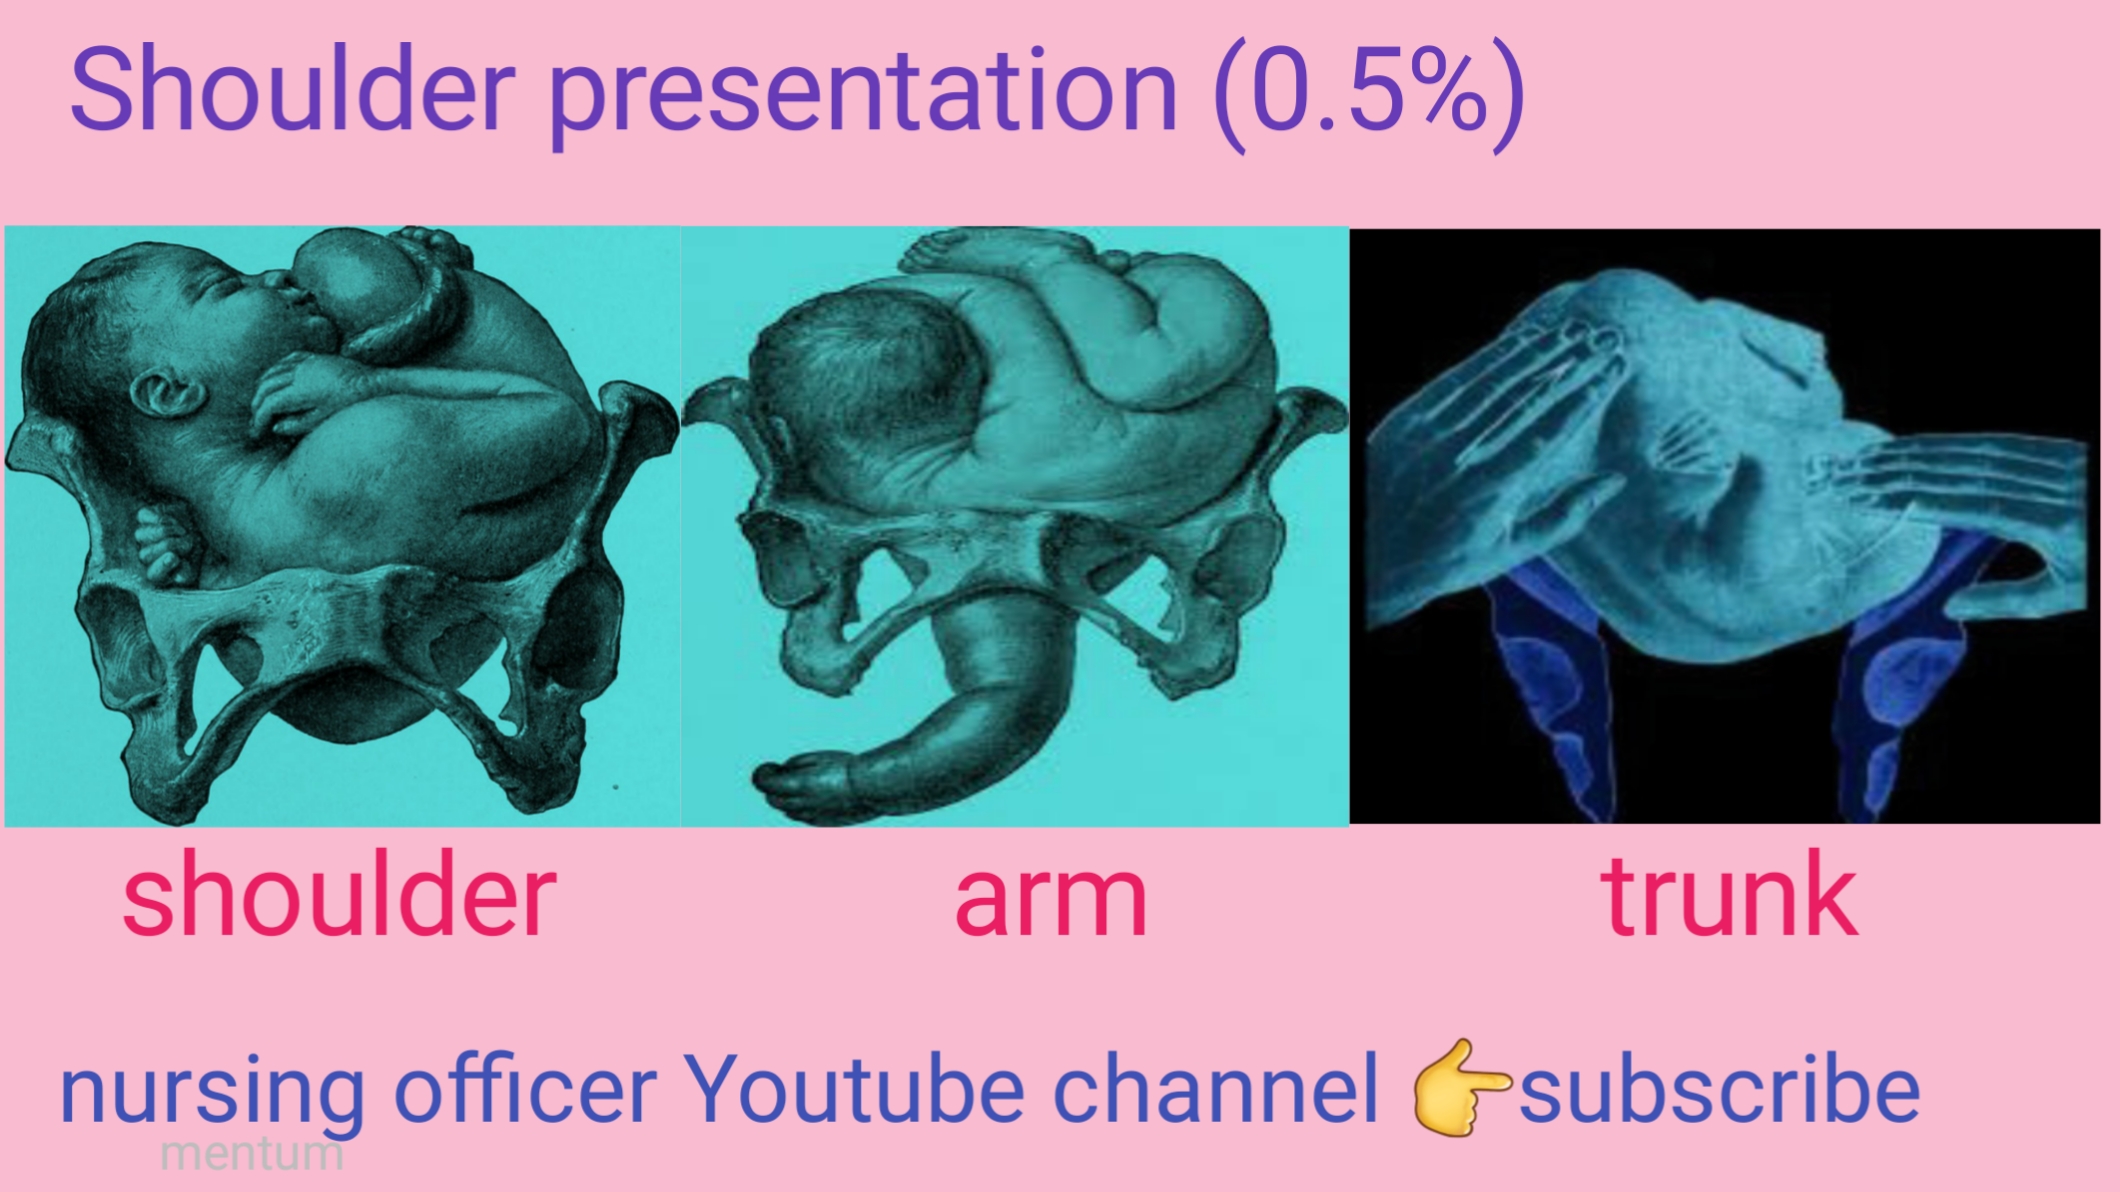 compound presentation of fetus